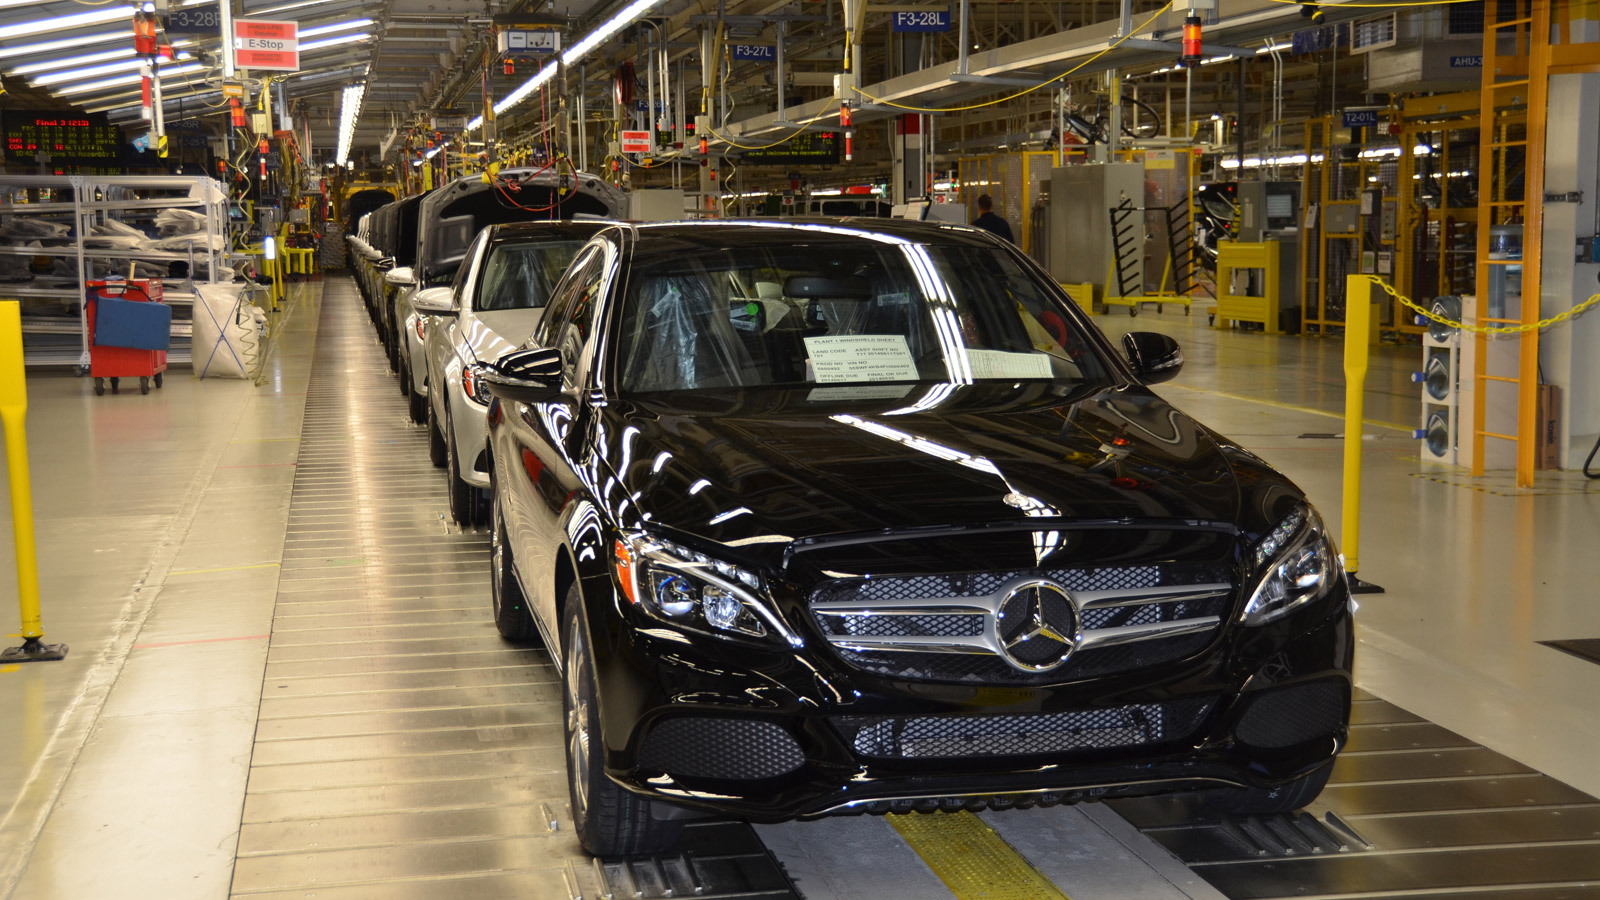 Mercedes-Benz C-Class production in Tuscaloosa, Alabama